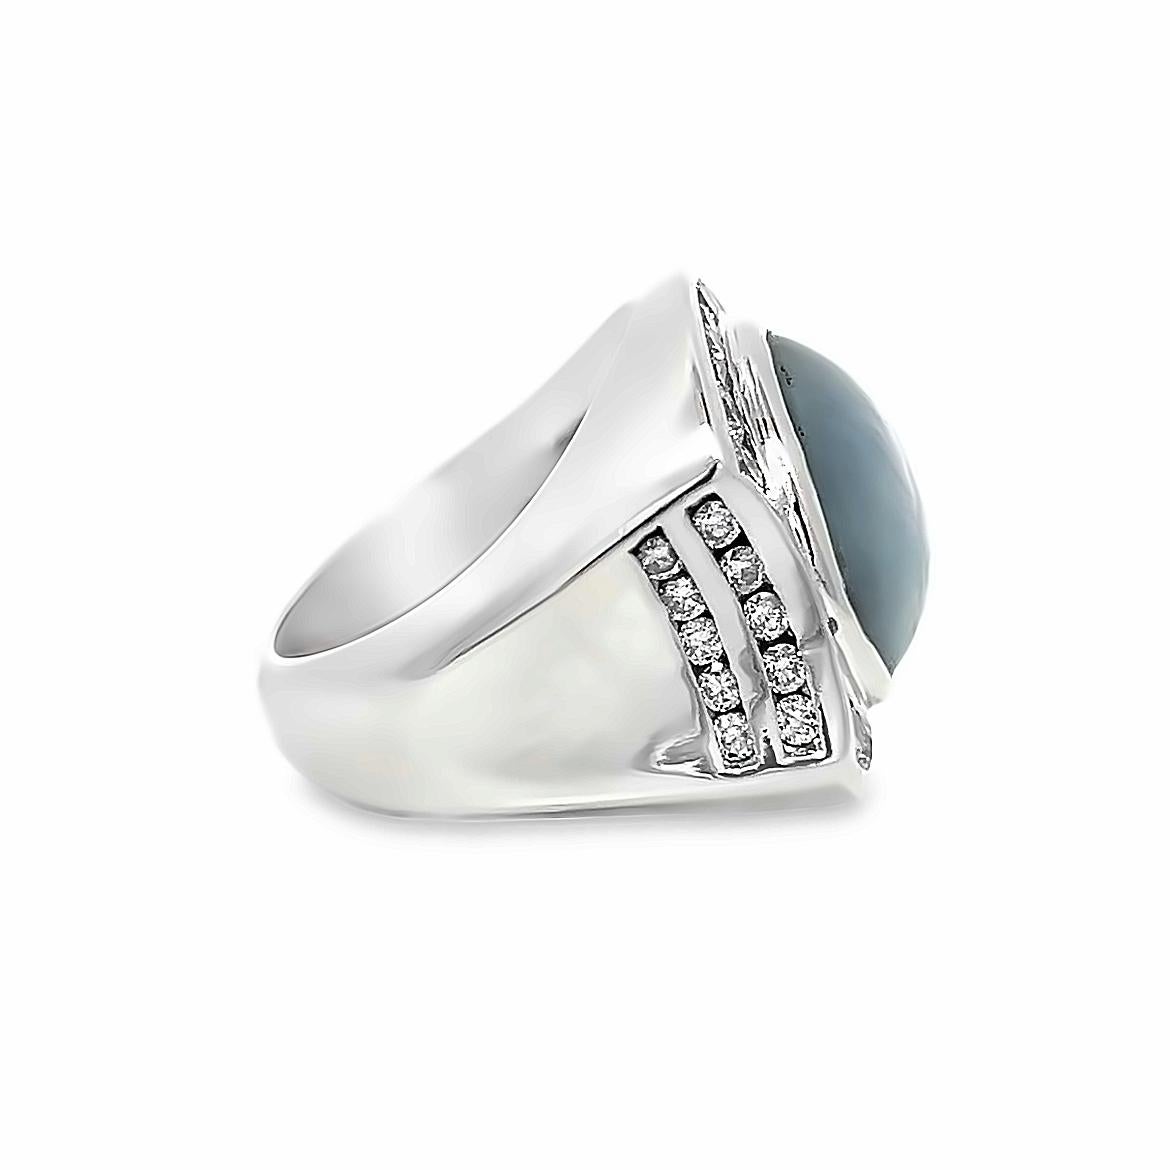 Aesthetic Movement 21.00CT Star Sapphire/ Diamond Men's Ring set in 14K White Gold For Sale